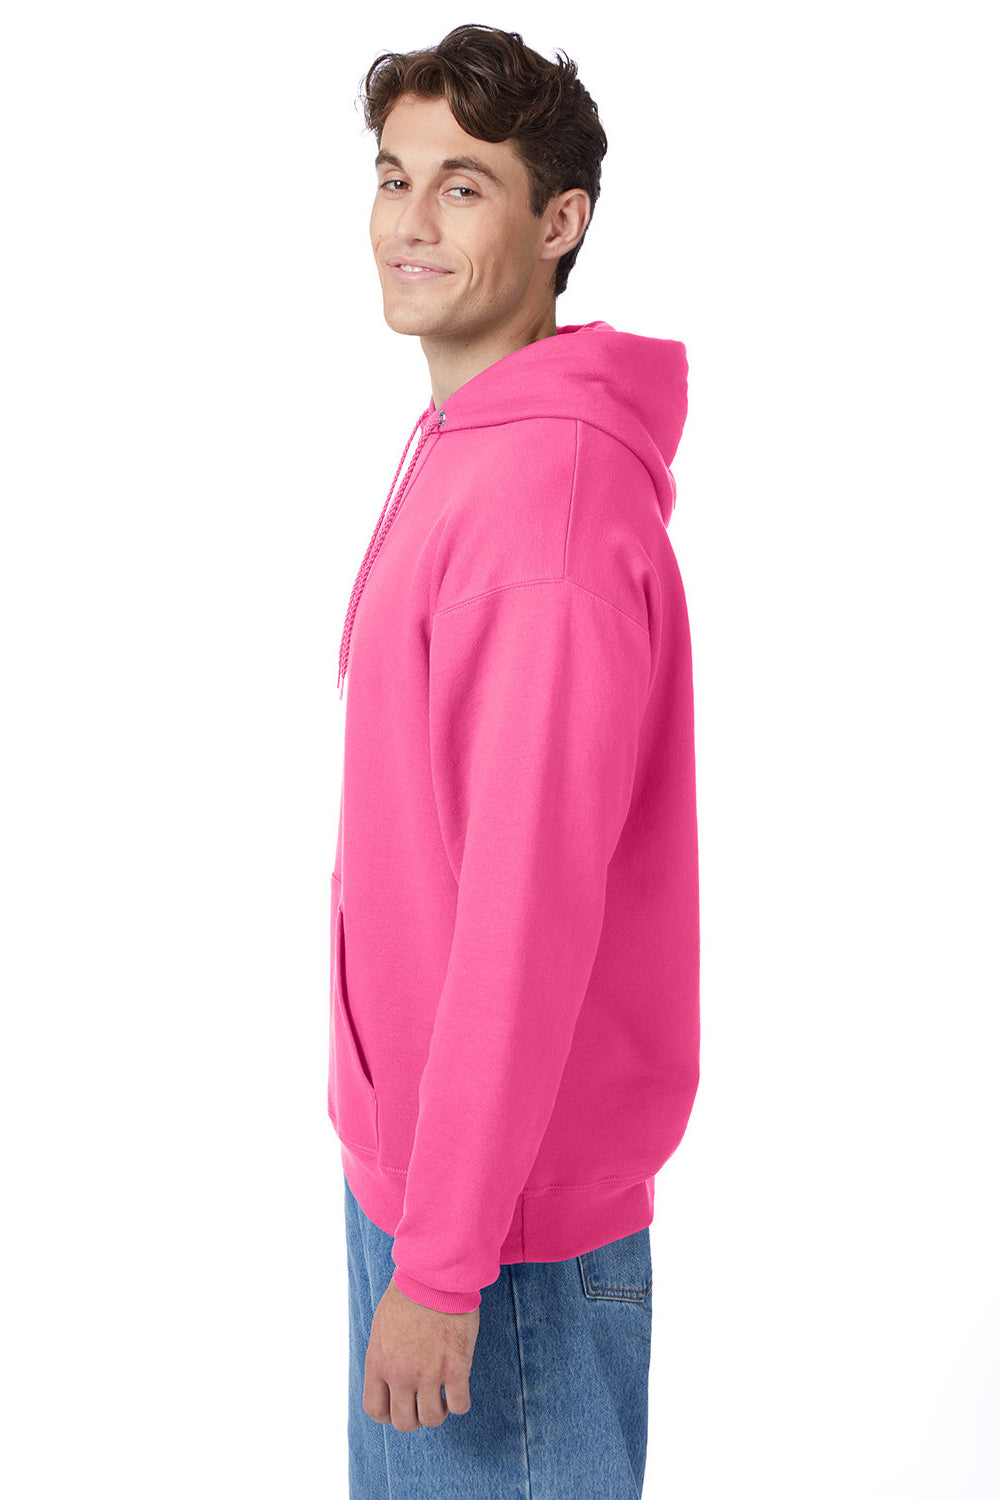 Hanes P170 Mens EcoSmart Print Pro XP Hooded Sweatshirt Hoodie Safety Pink SIde